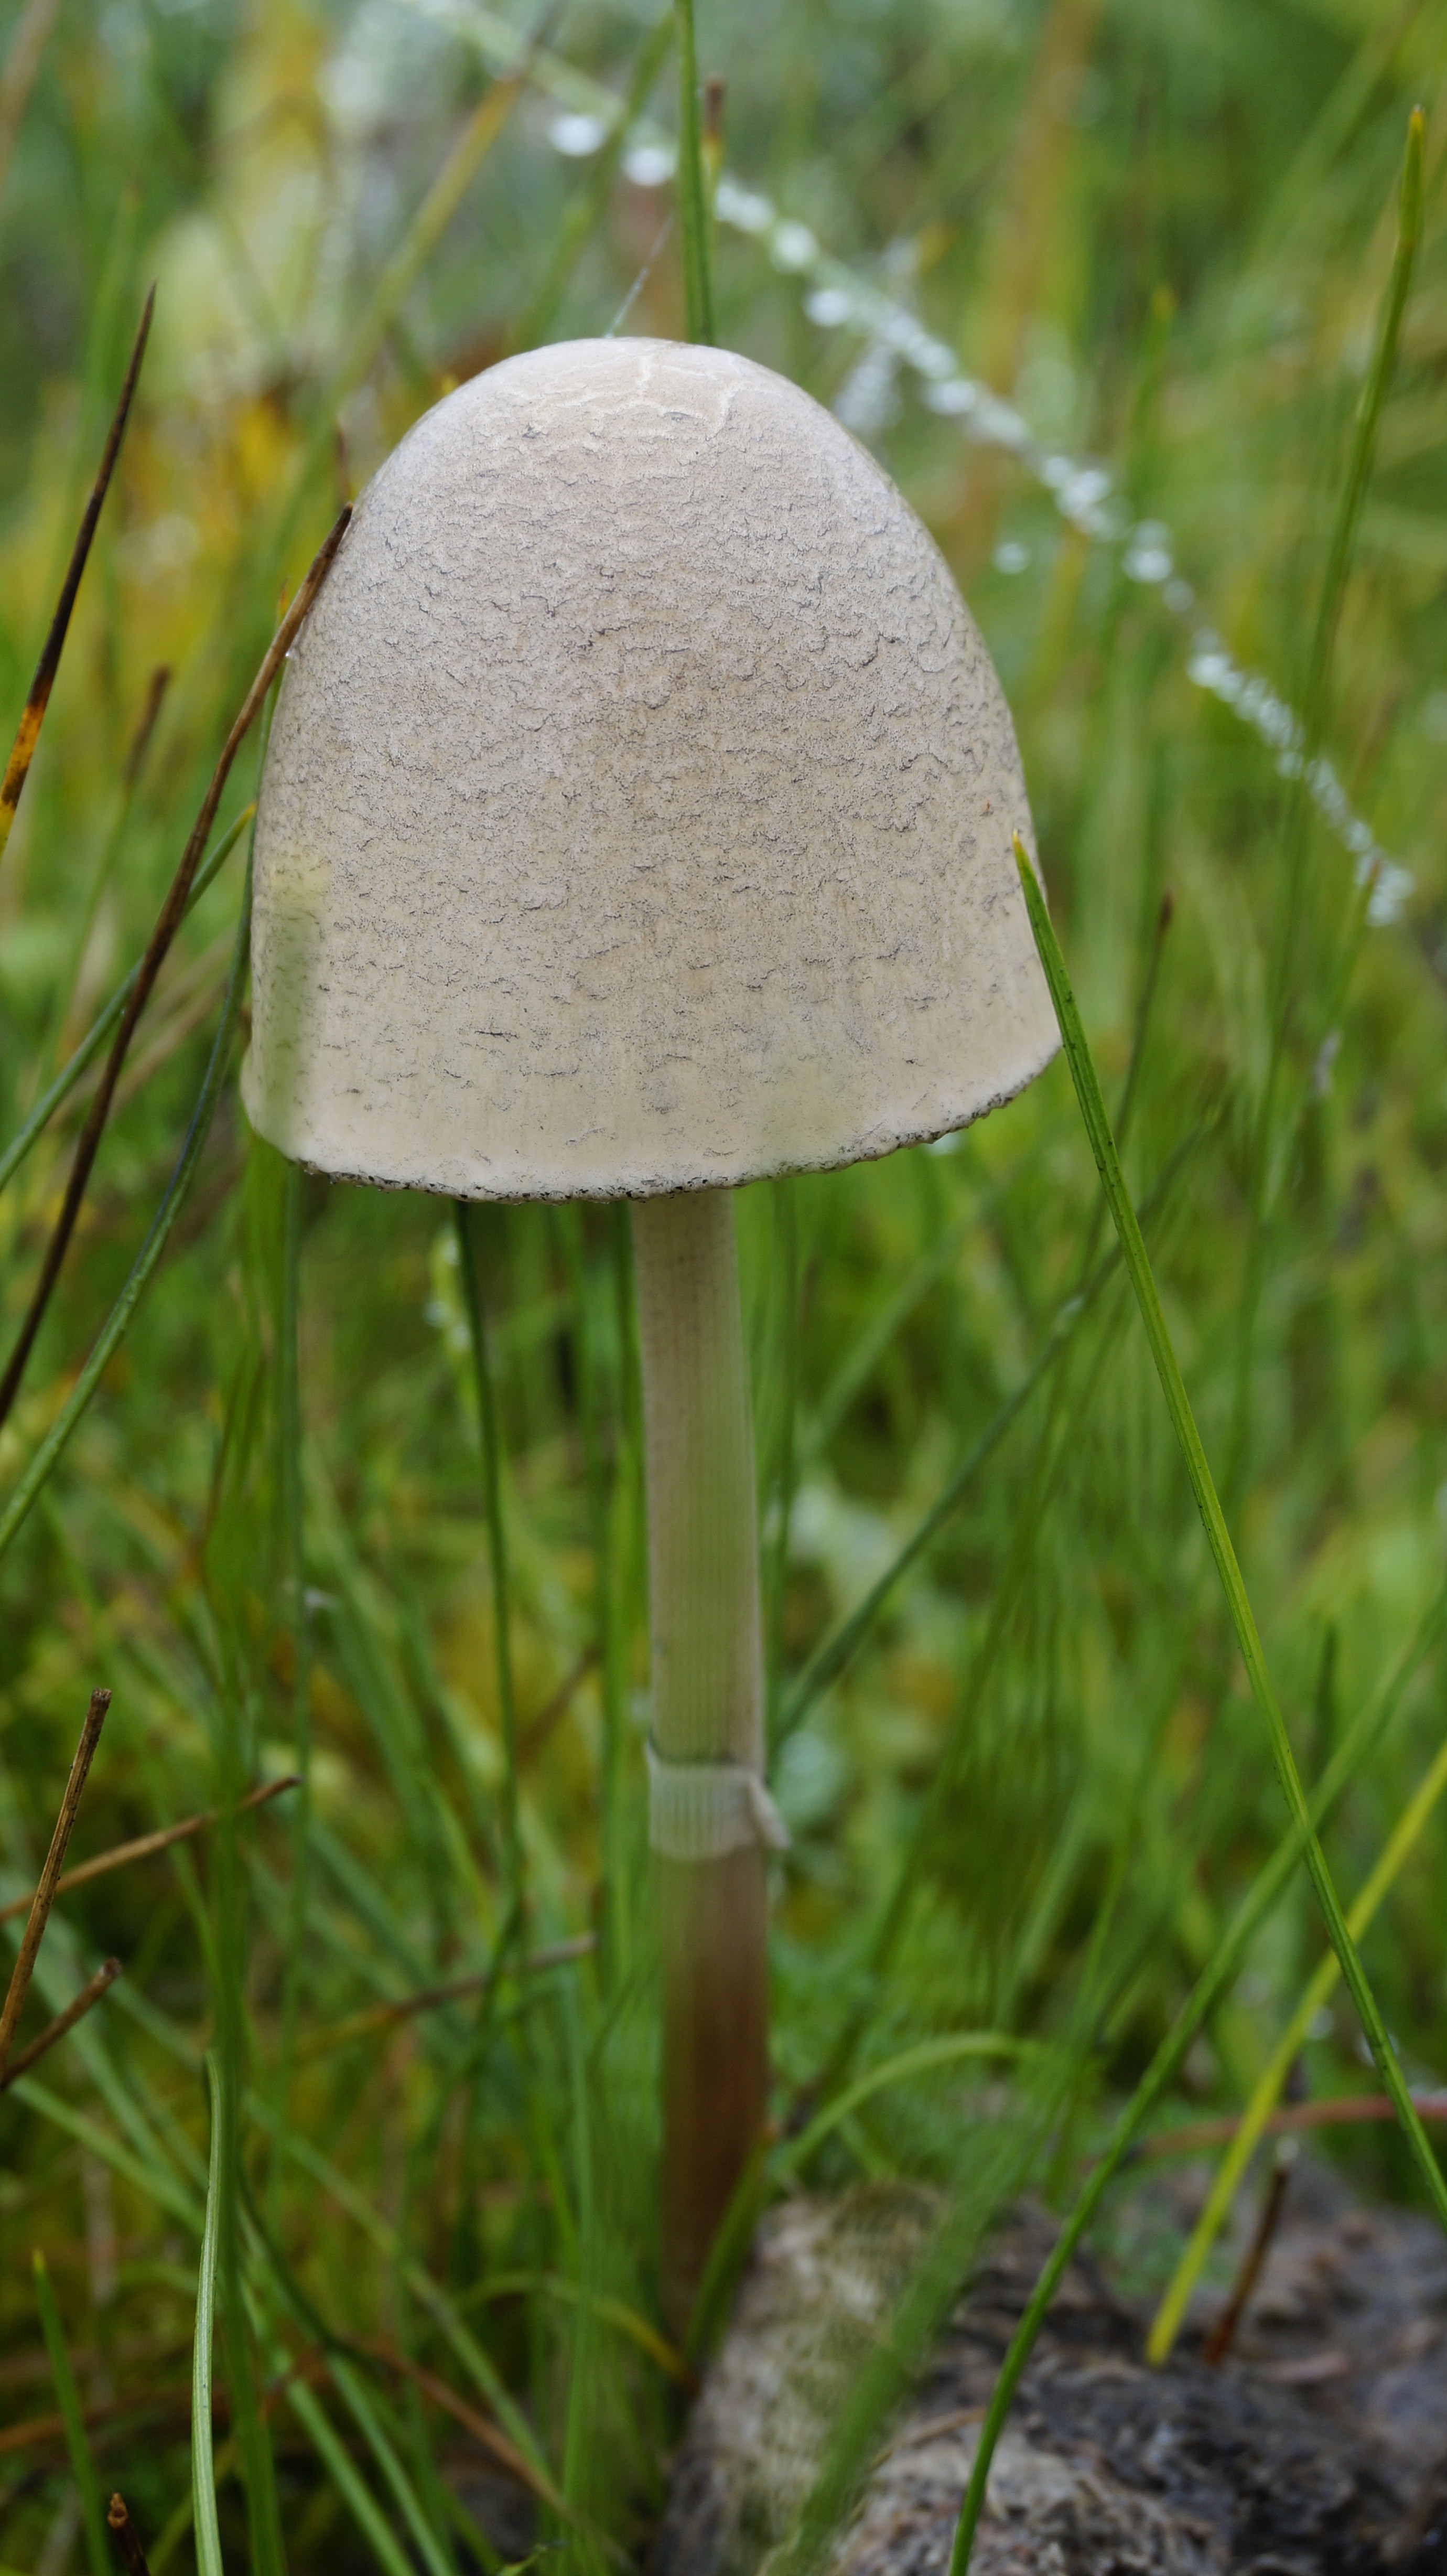 Mushroom, Umbrella, Grassland, growth, mushroom